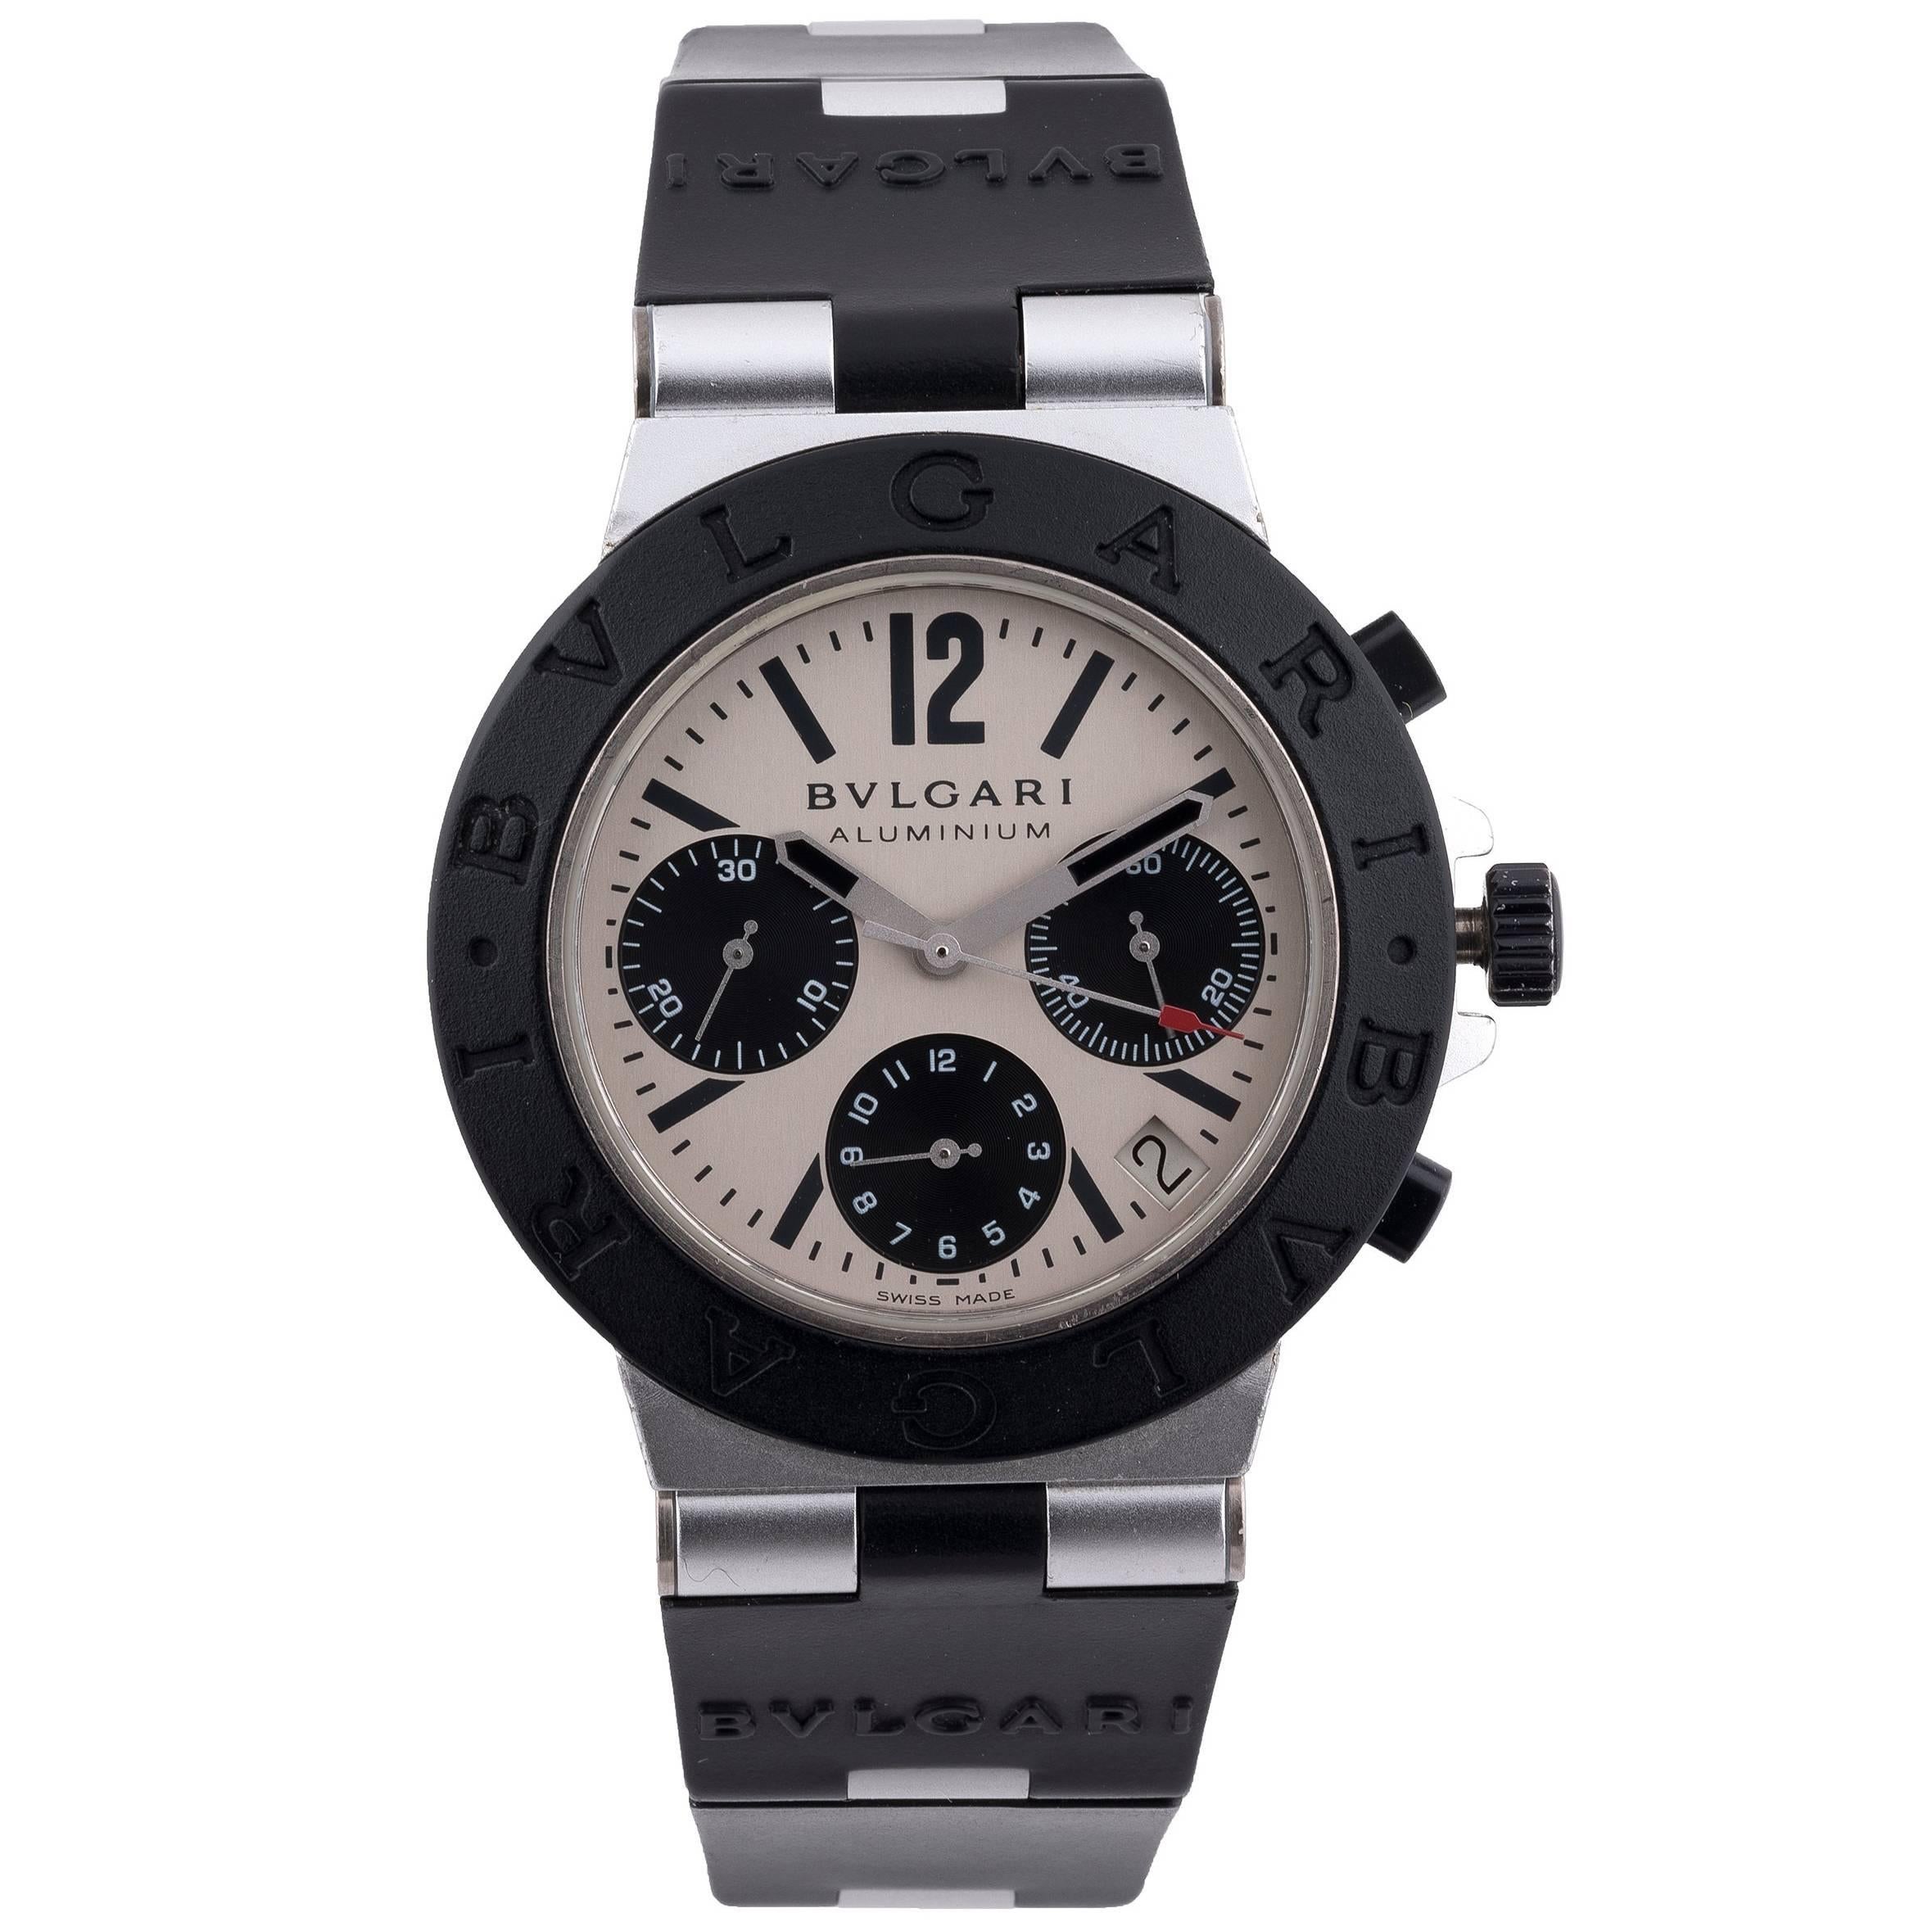 Bulgari Aluminium Diagono Chronograph Automatic Wristwatch